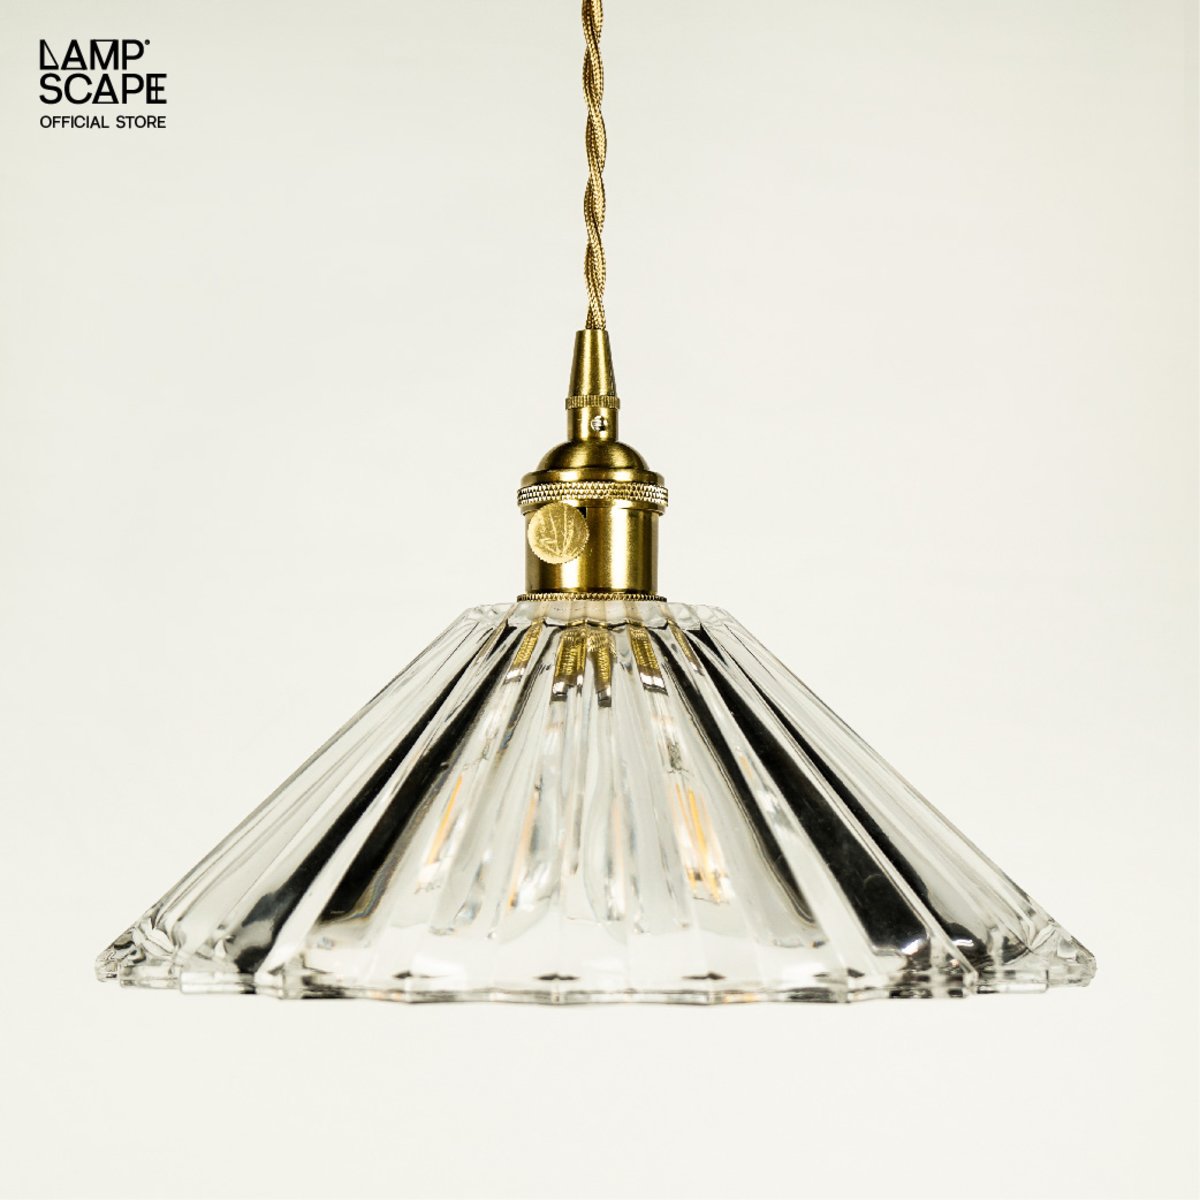 Lampscape โคมแก้วใสสไตล์วินเทจทรงป้านขอบหยัก รุ่นVintage Glass Pendant Lamp  ขนาด24x16cm